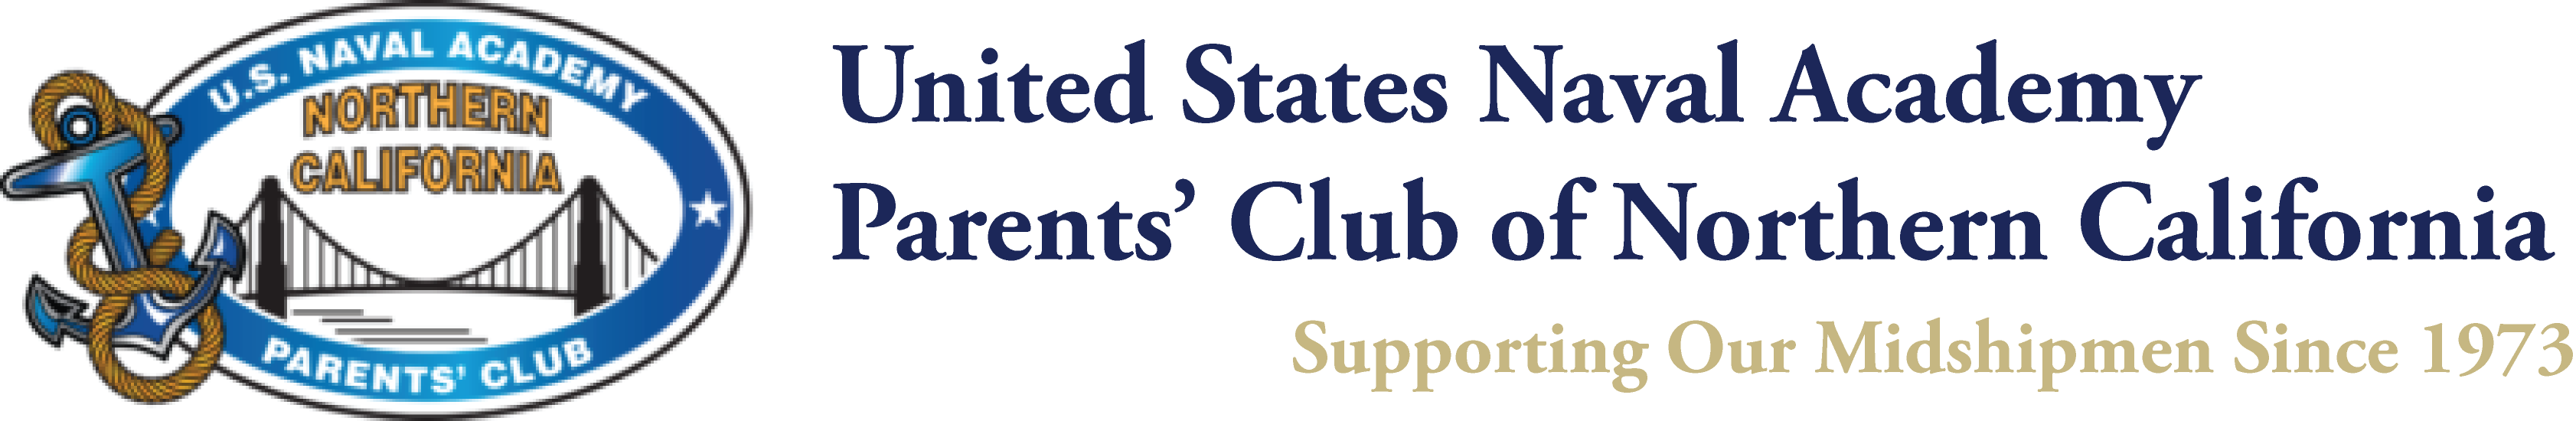 U.S. Naval Academy Parents Club of Northern California